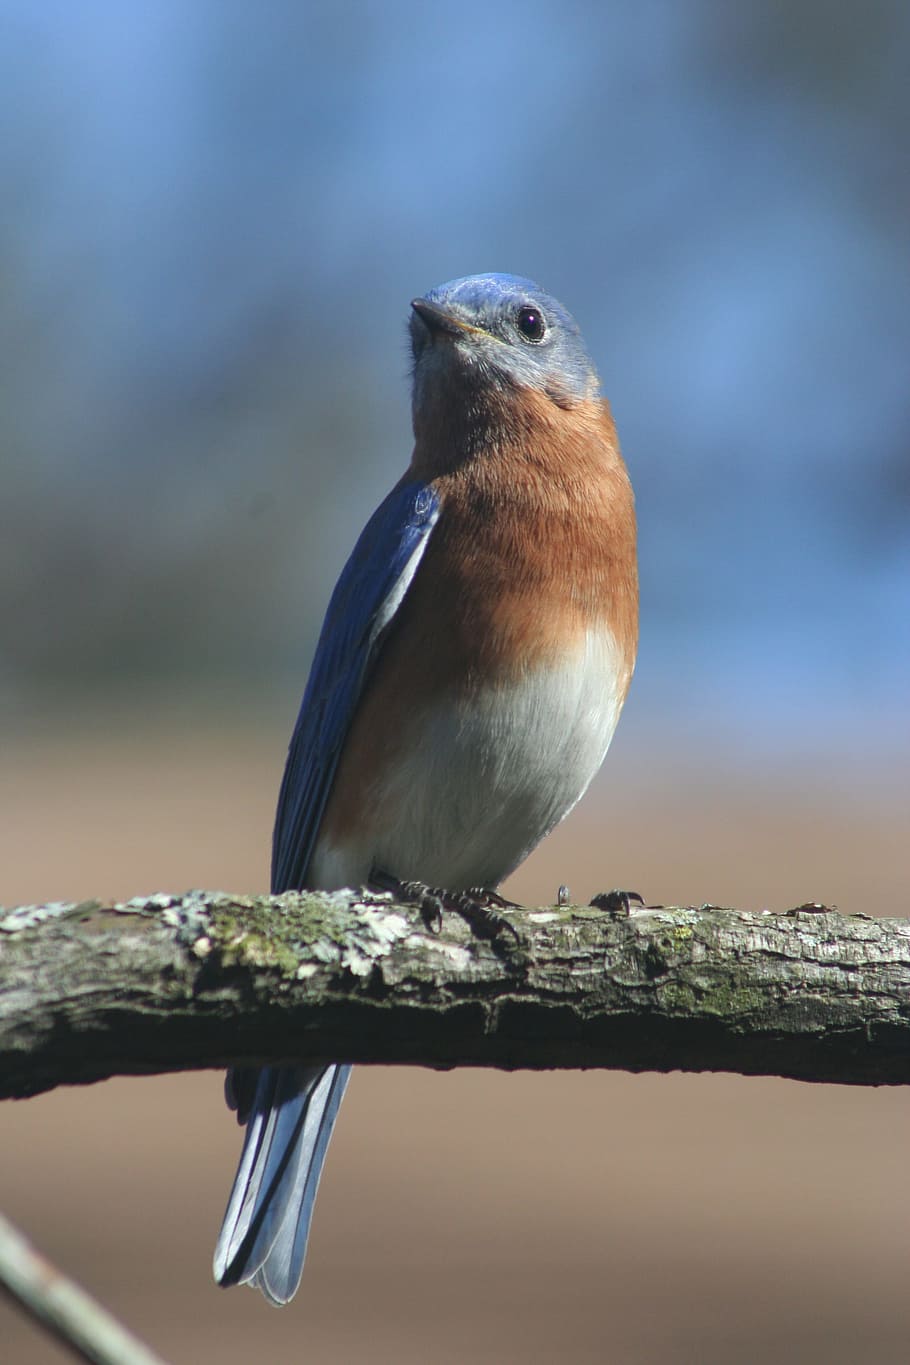 Eastern Bluebird, Bird, blue, bluebird, nature, wildlife, songbird, animal, feathers, wing